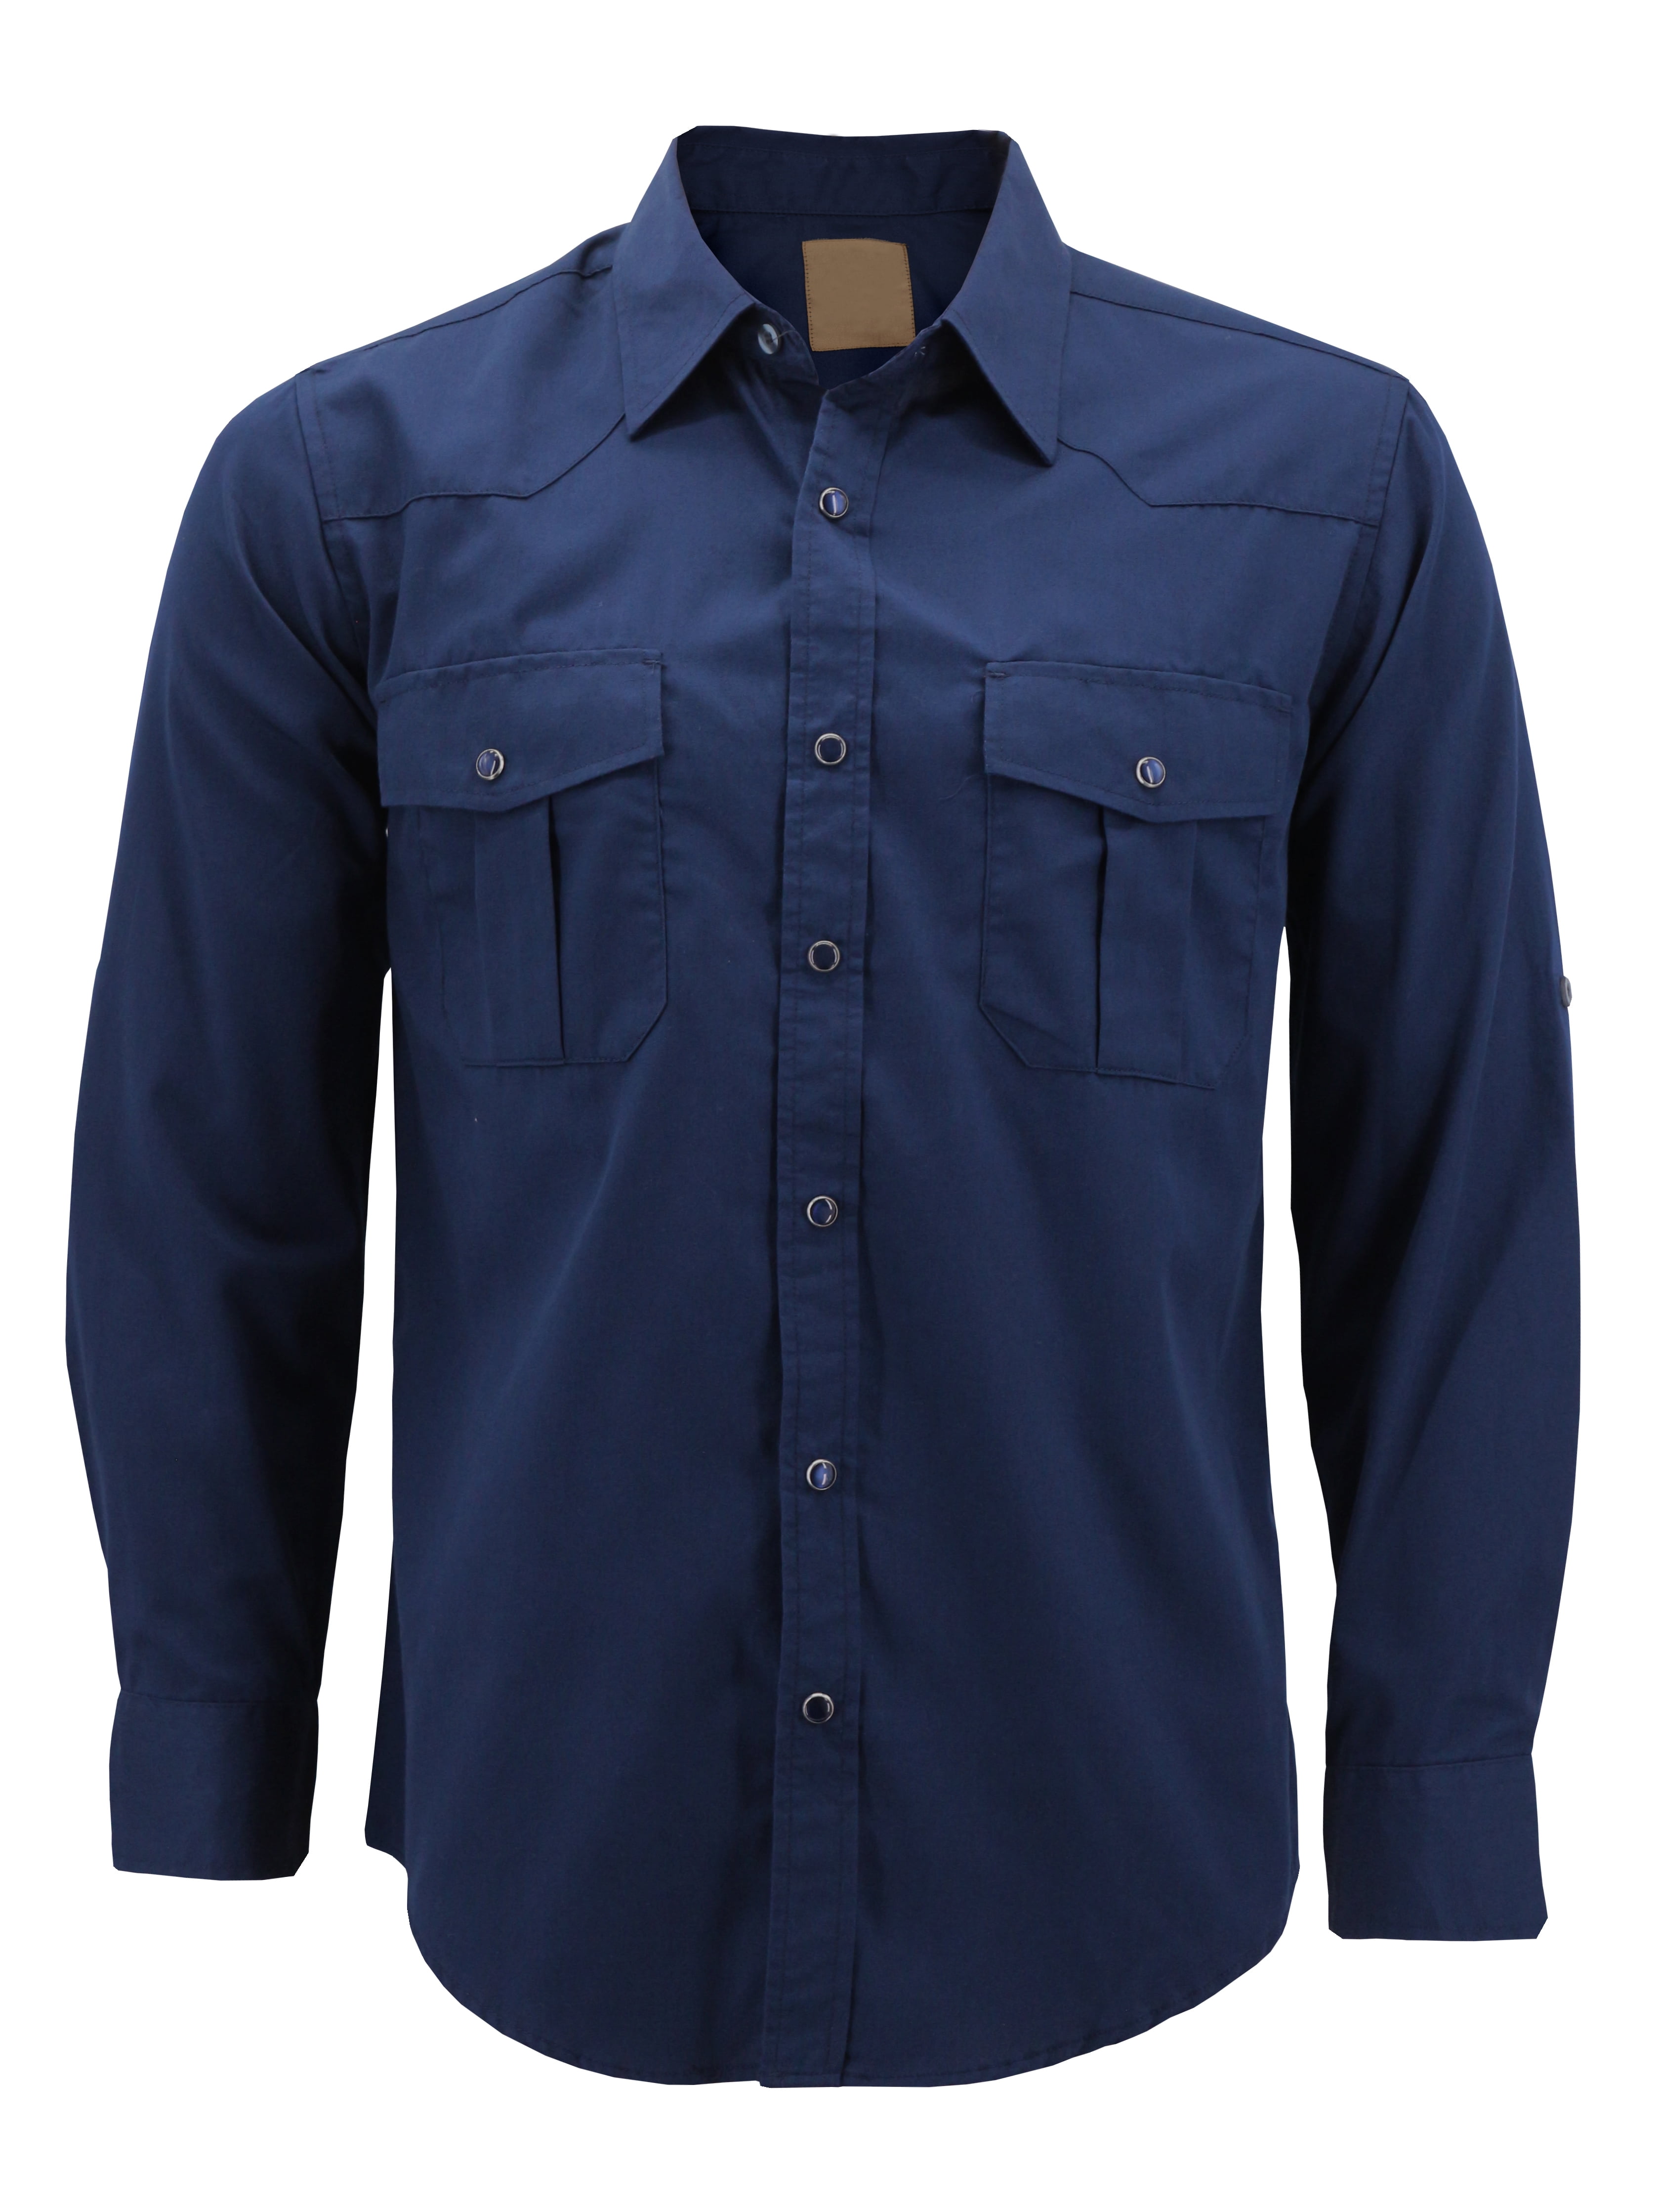 NAVY BLUE Button Down Long Sleeve Shirt~BIG Men's Size 3XL~New w/tags 